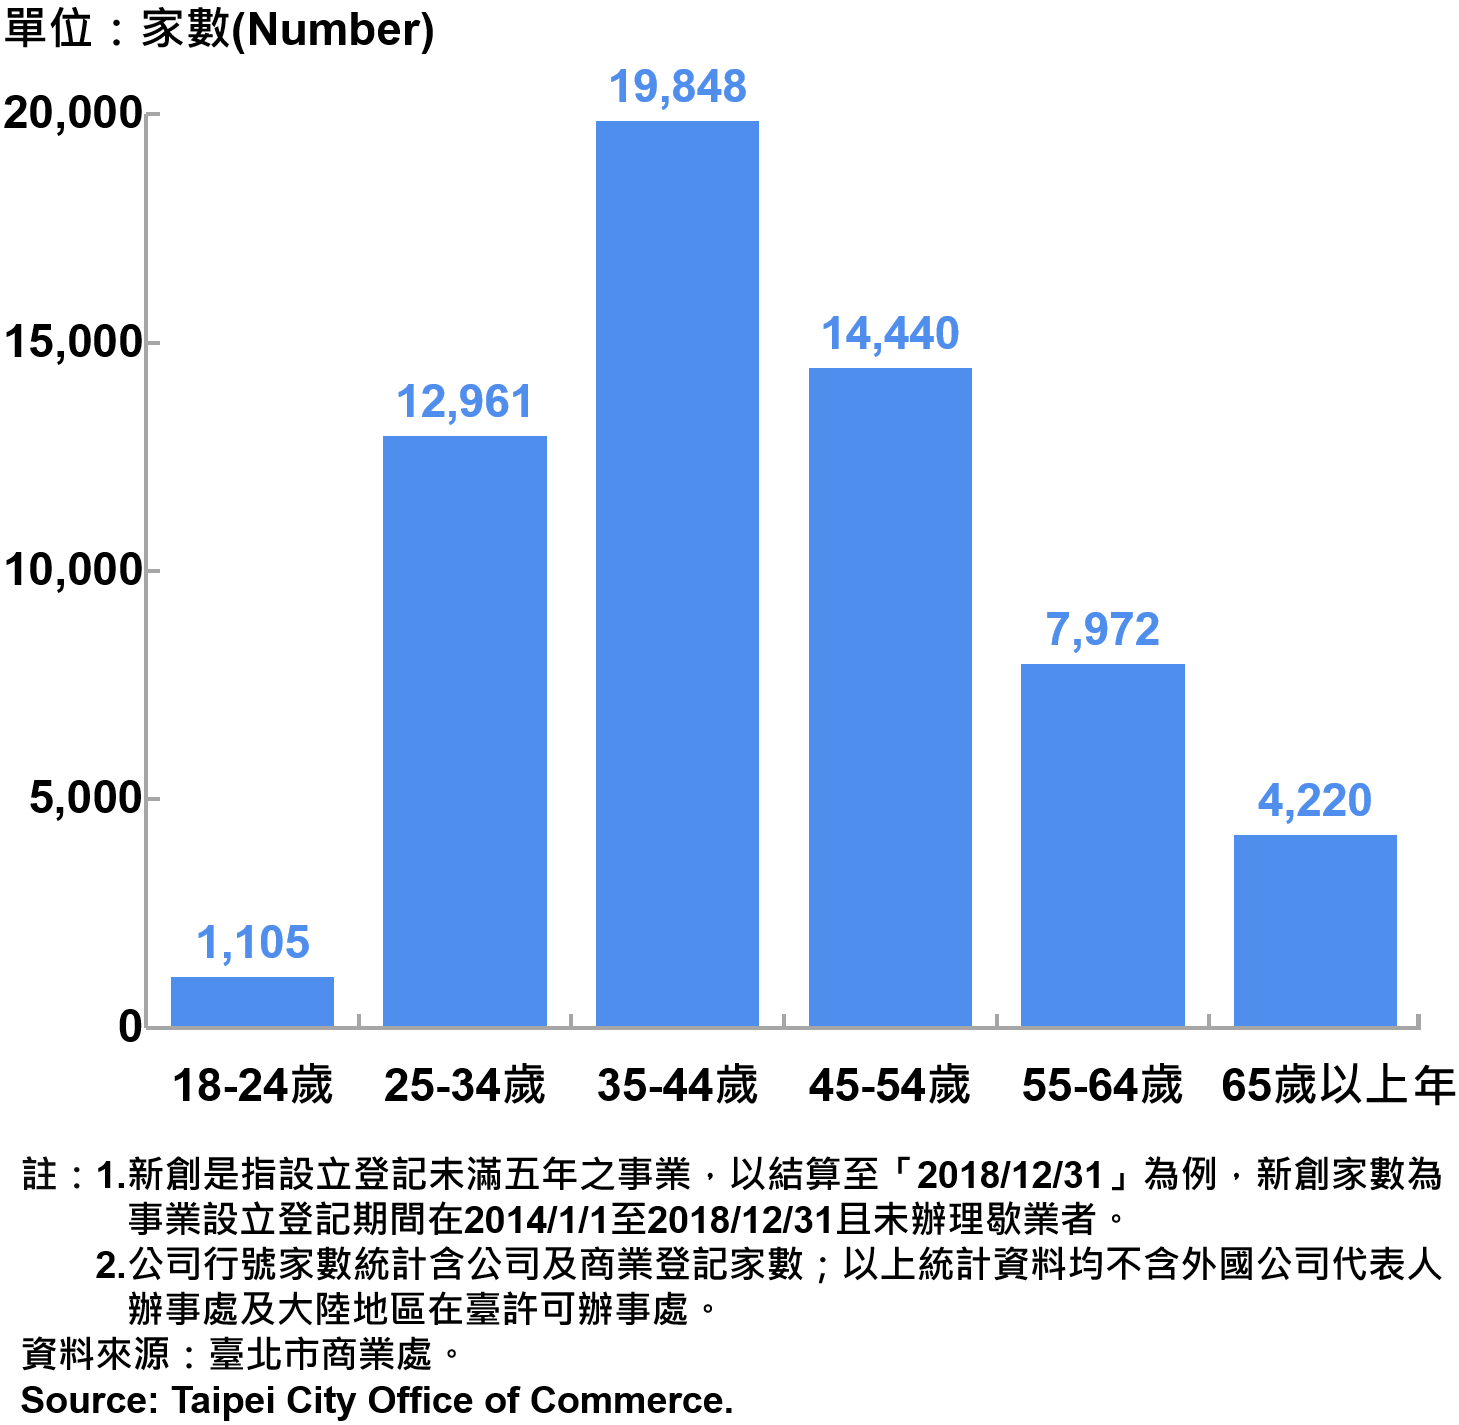 臺北市新創公司行號負責人年齡分布情形-現存家數—2021 Responsible Person of Newly Registered Companies In Taipei City by Age - Number of Current —2021